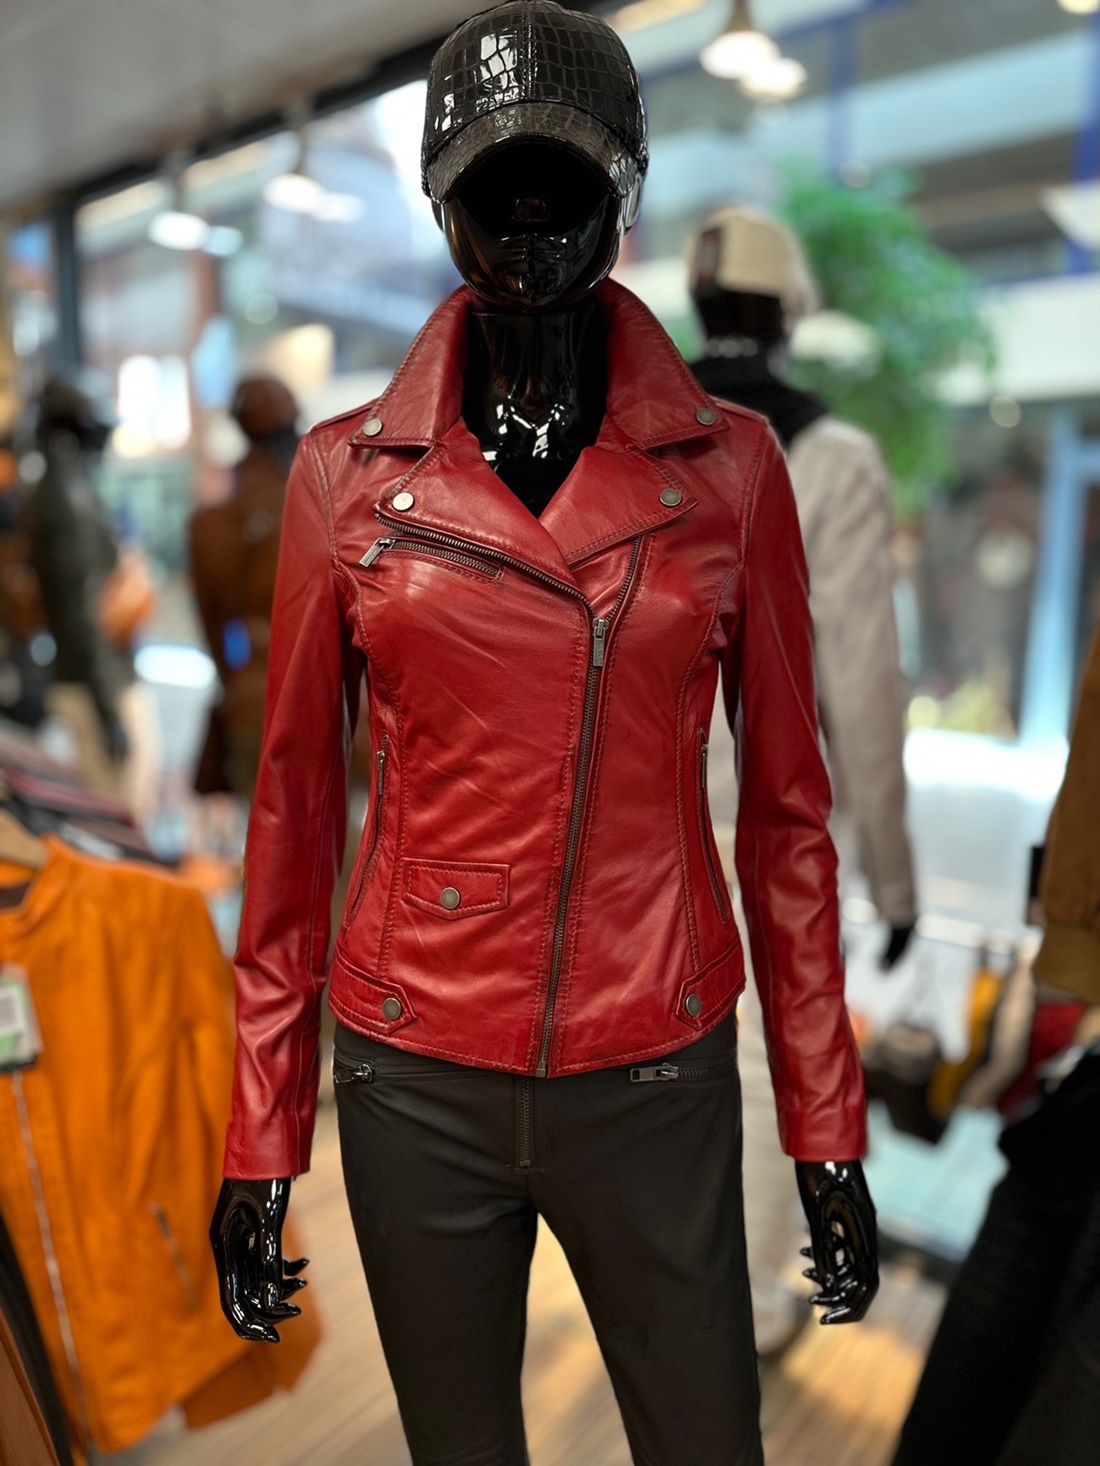 Extra kalmeren vrijgesteld Leren jasje dames perfecto classic rood - Nappato Leather